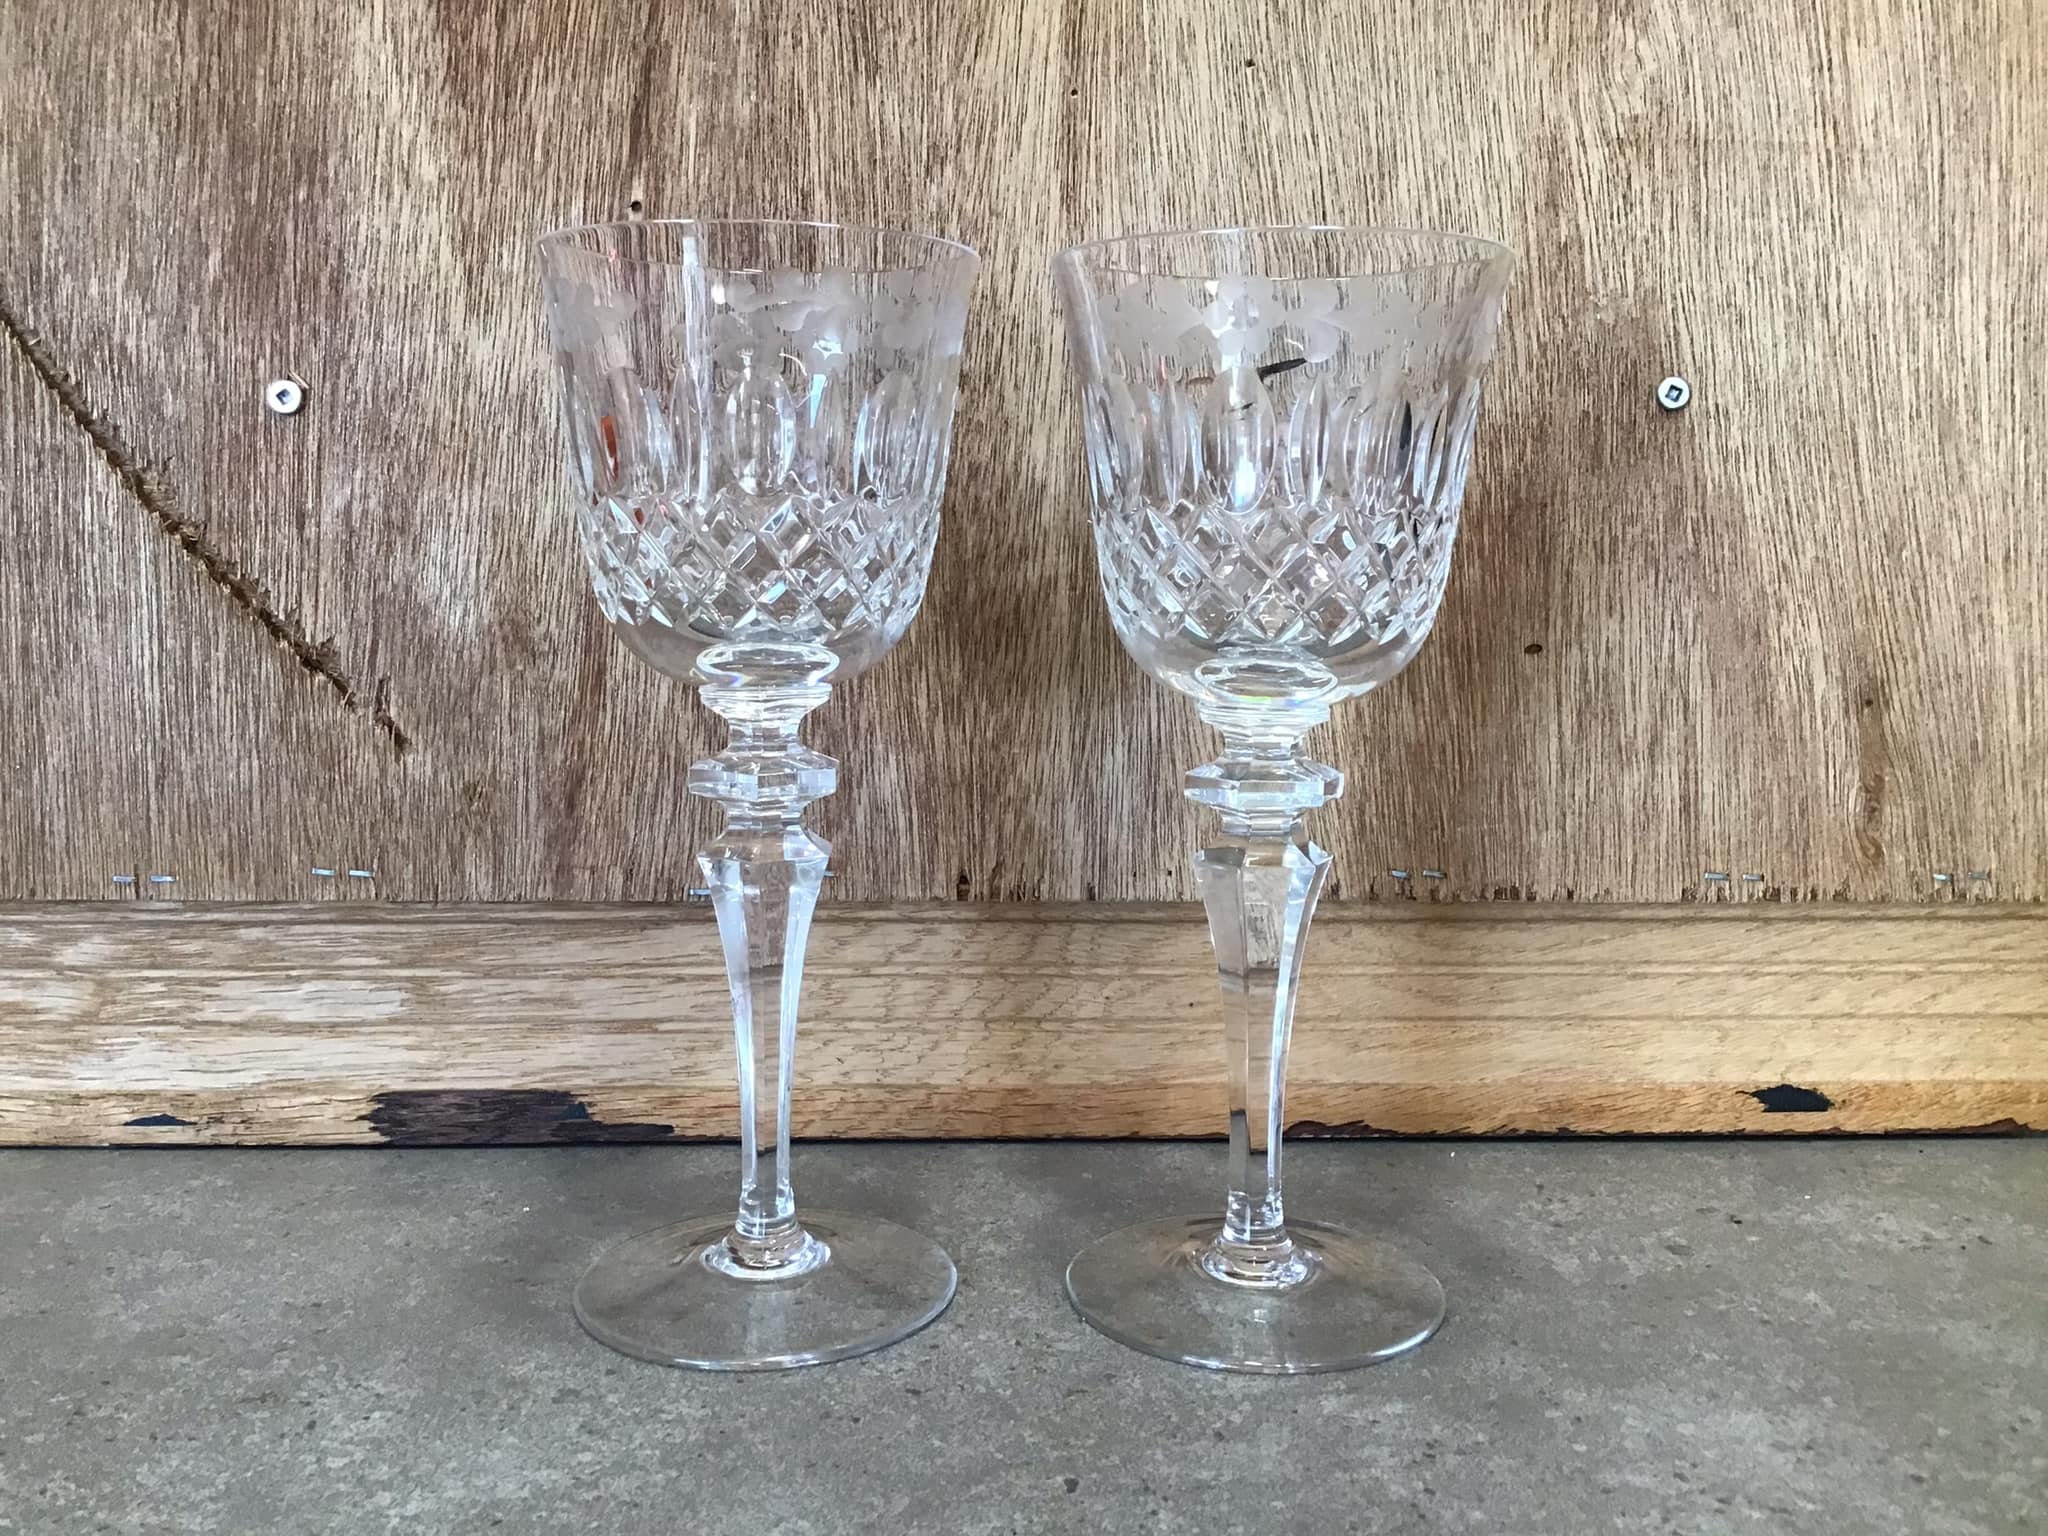 BENETI Square Crystal Wine Glasses Set Of 4 - European-made